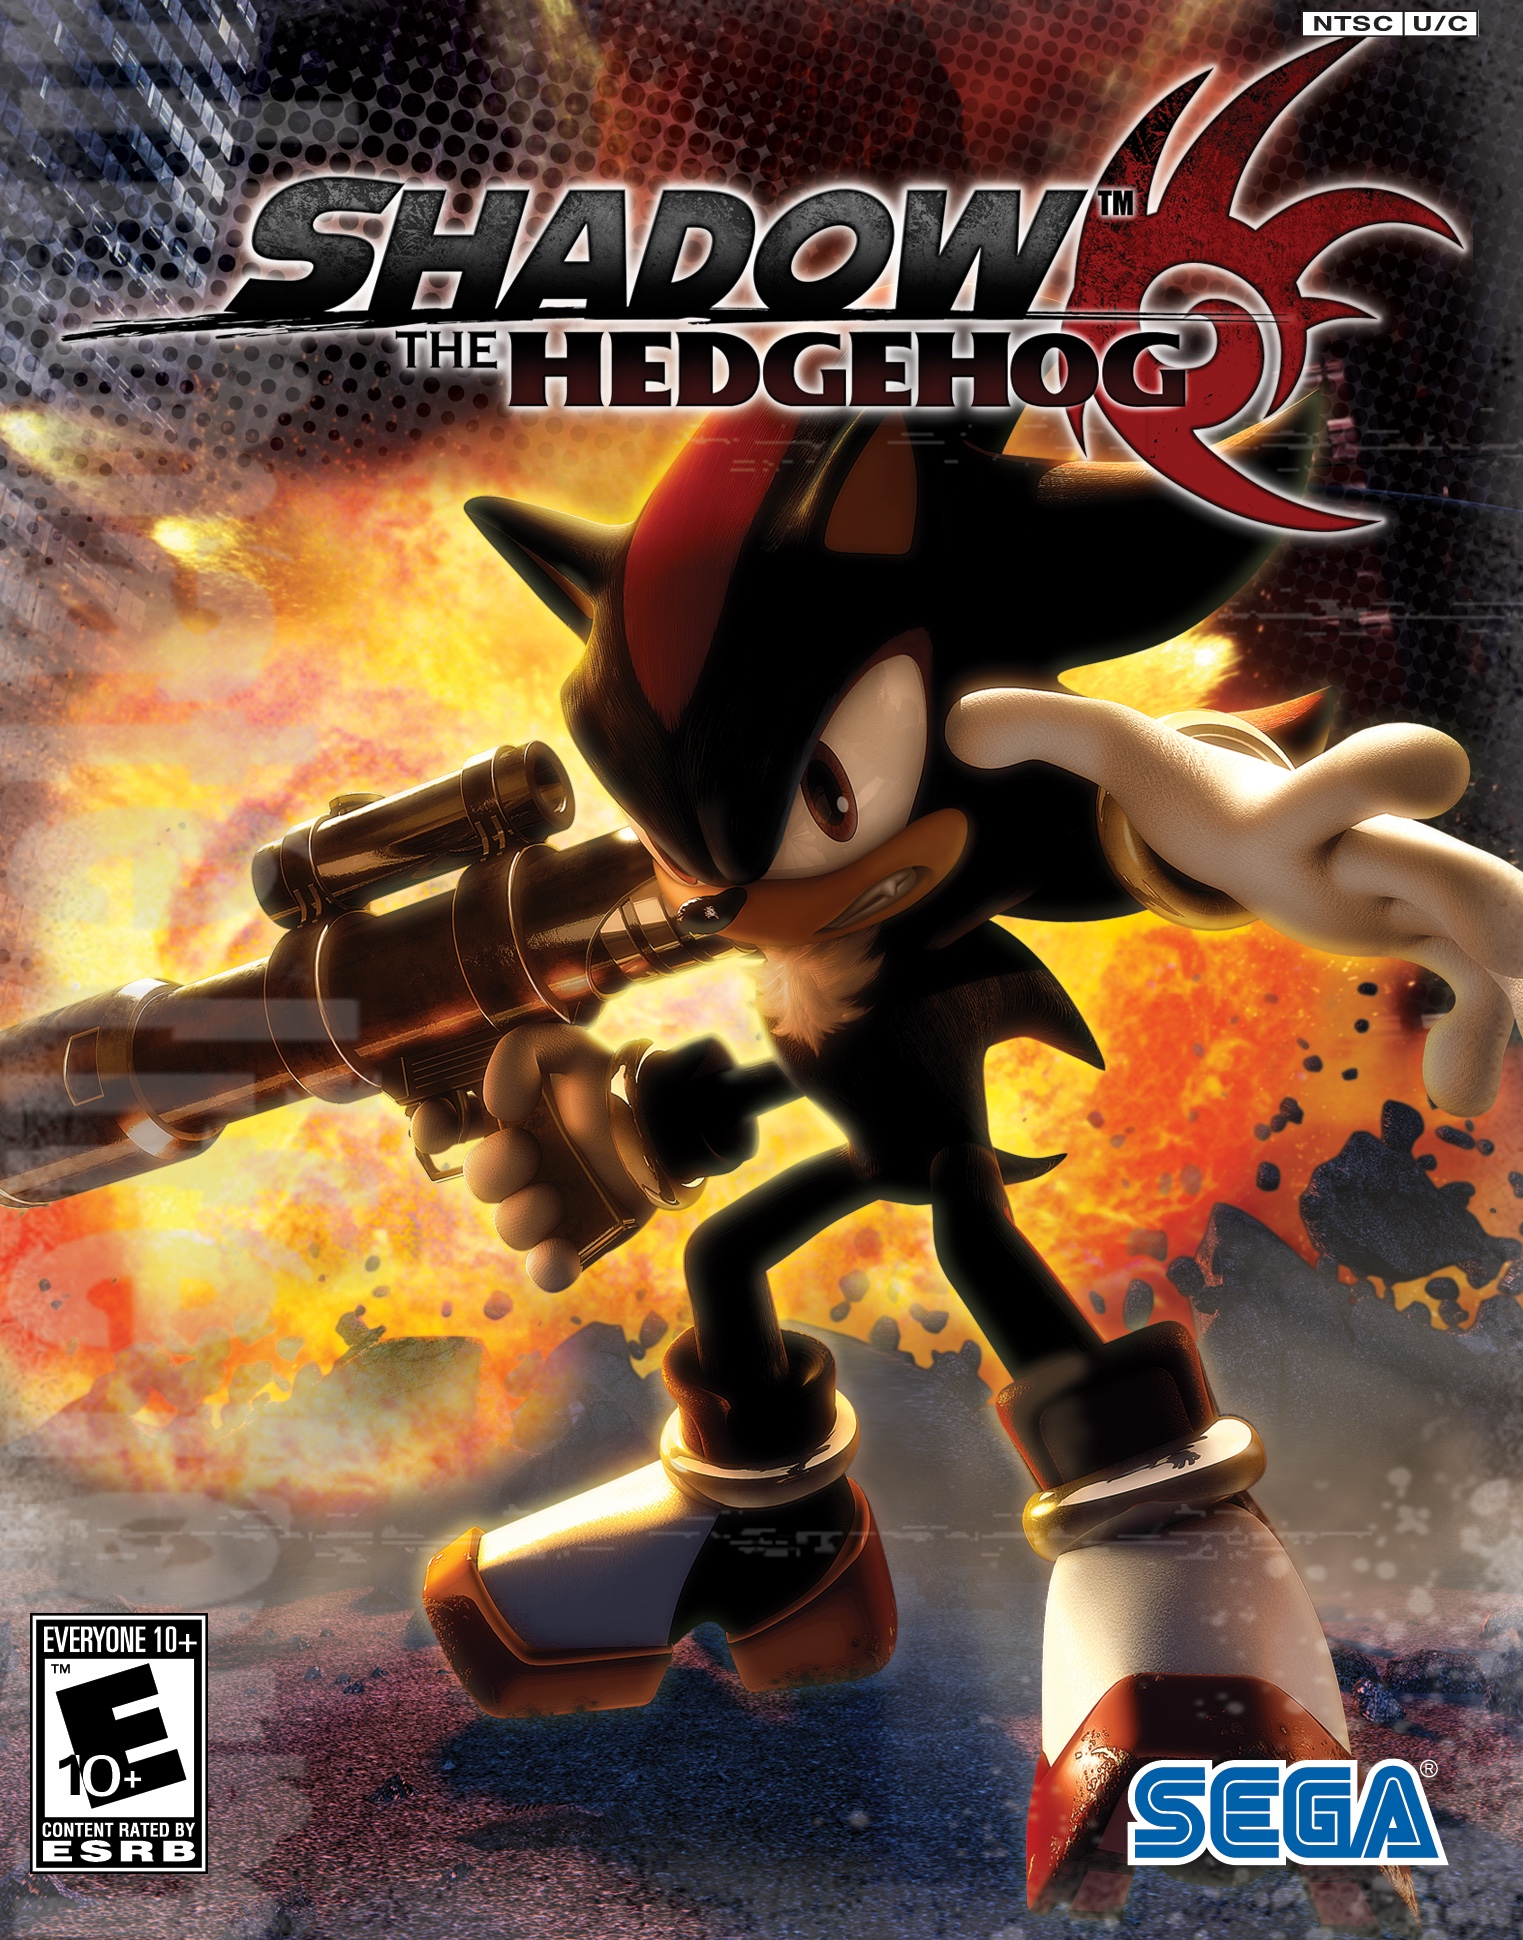 Sonic transformed all shadow scenes